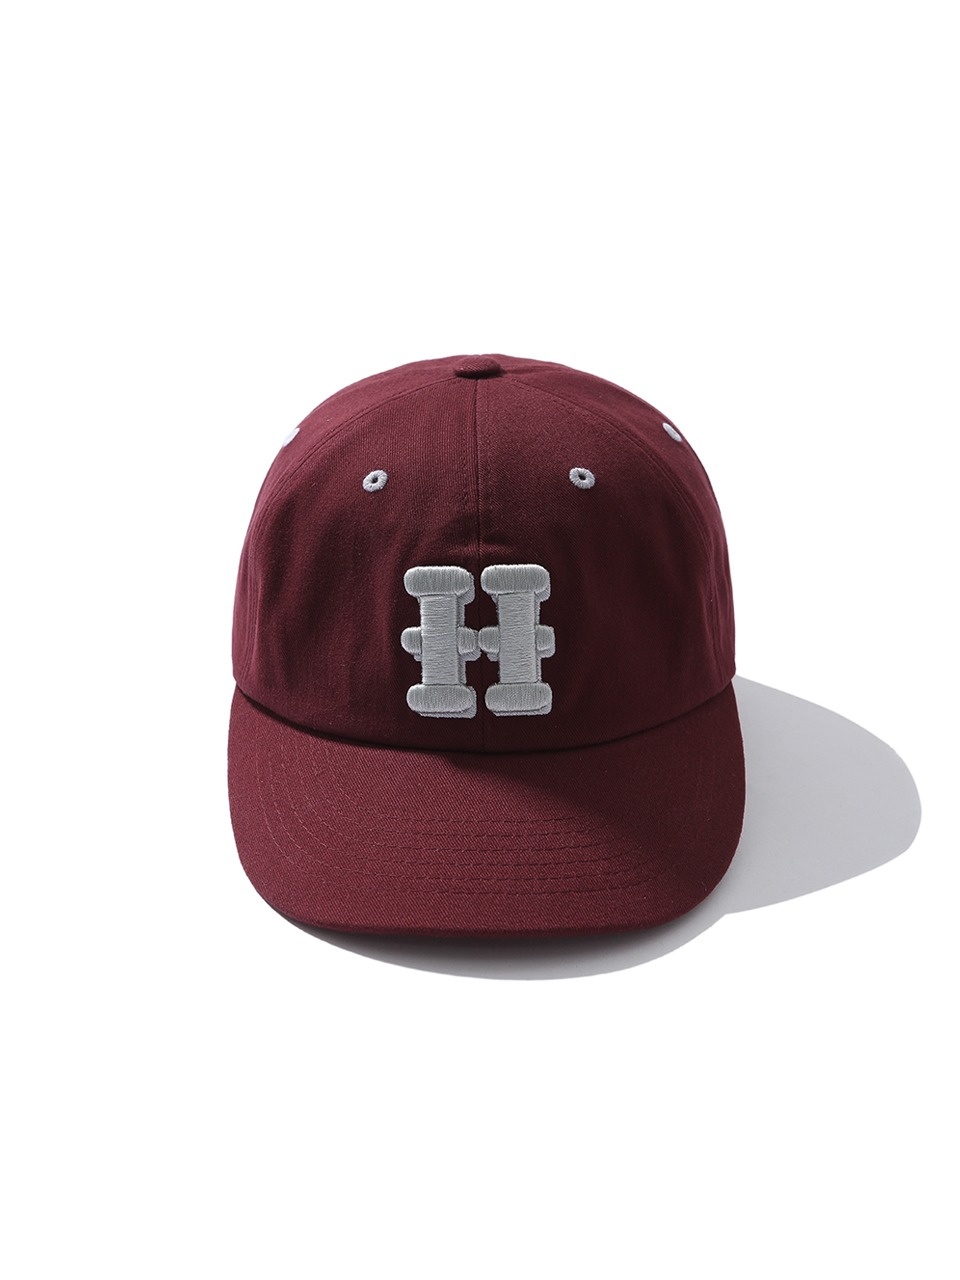 HUTOAN - HERITAGE BALL CAP (OLD WINE)